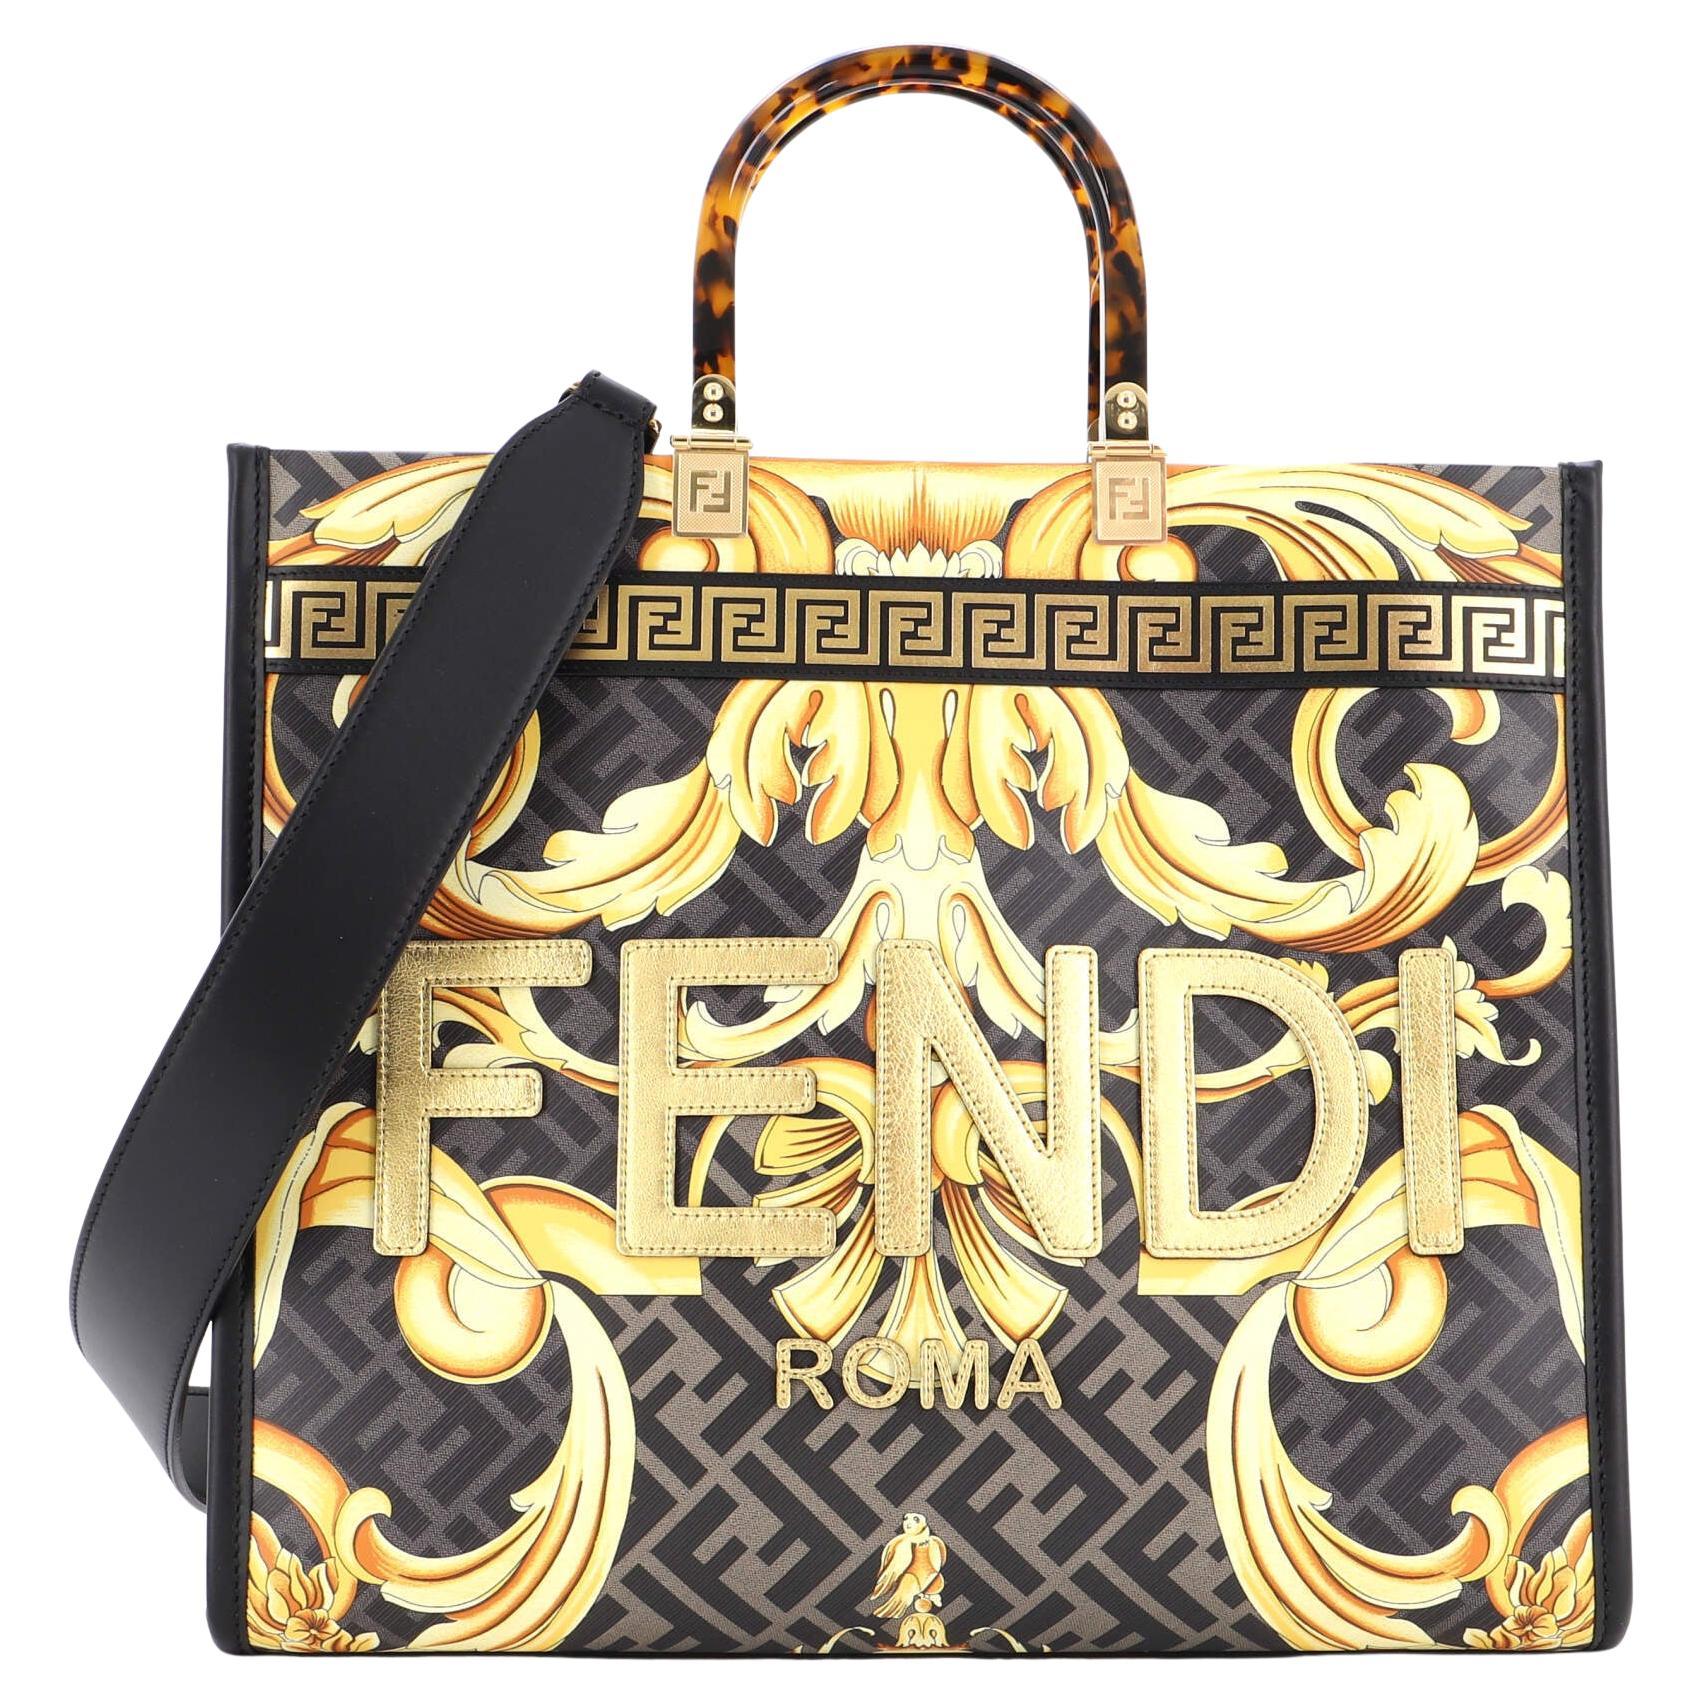 Fendi Versace Bag - 12 For Sale on 1stDibs  fendace tote bag price, fendi  x versace bag, fendi versace collab bag price